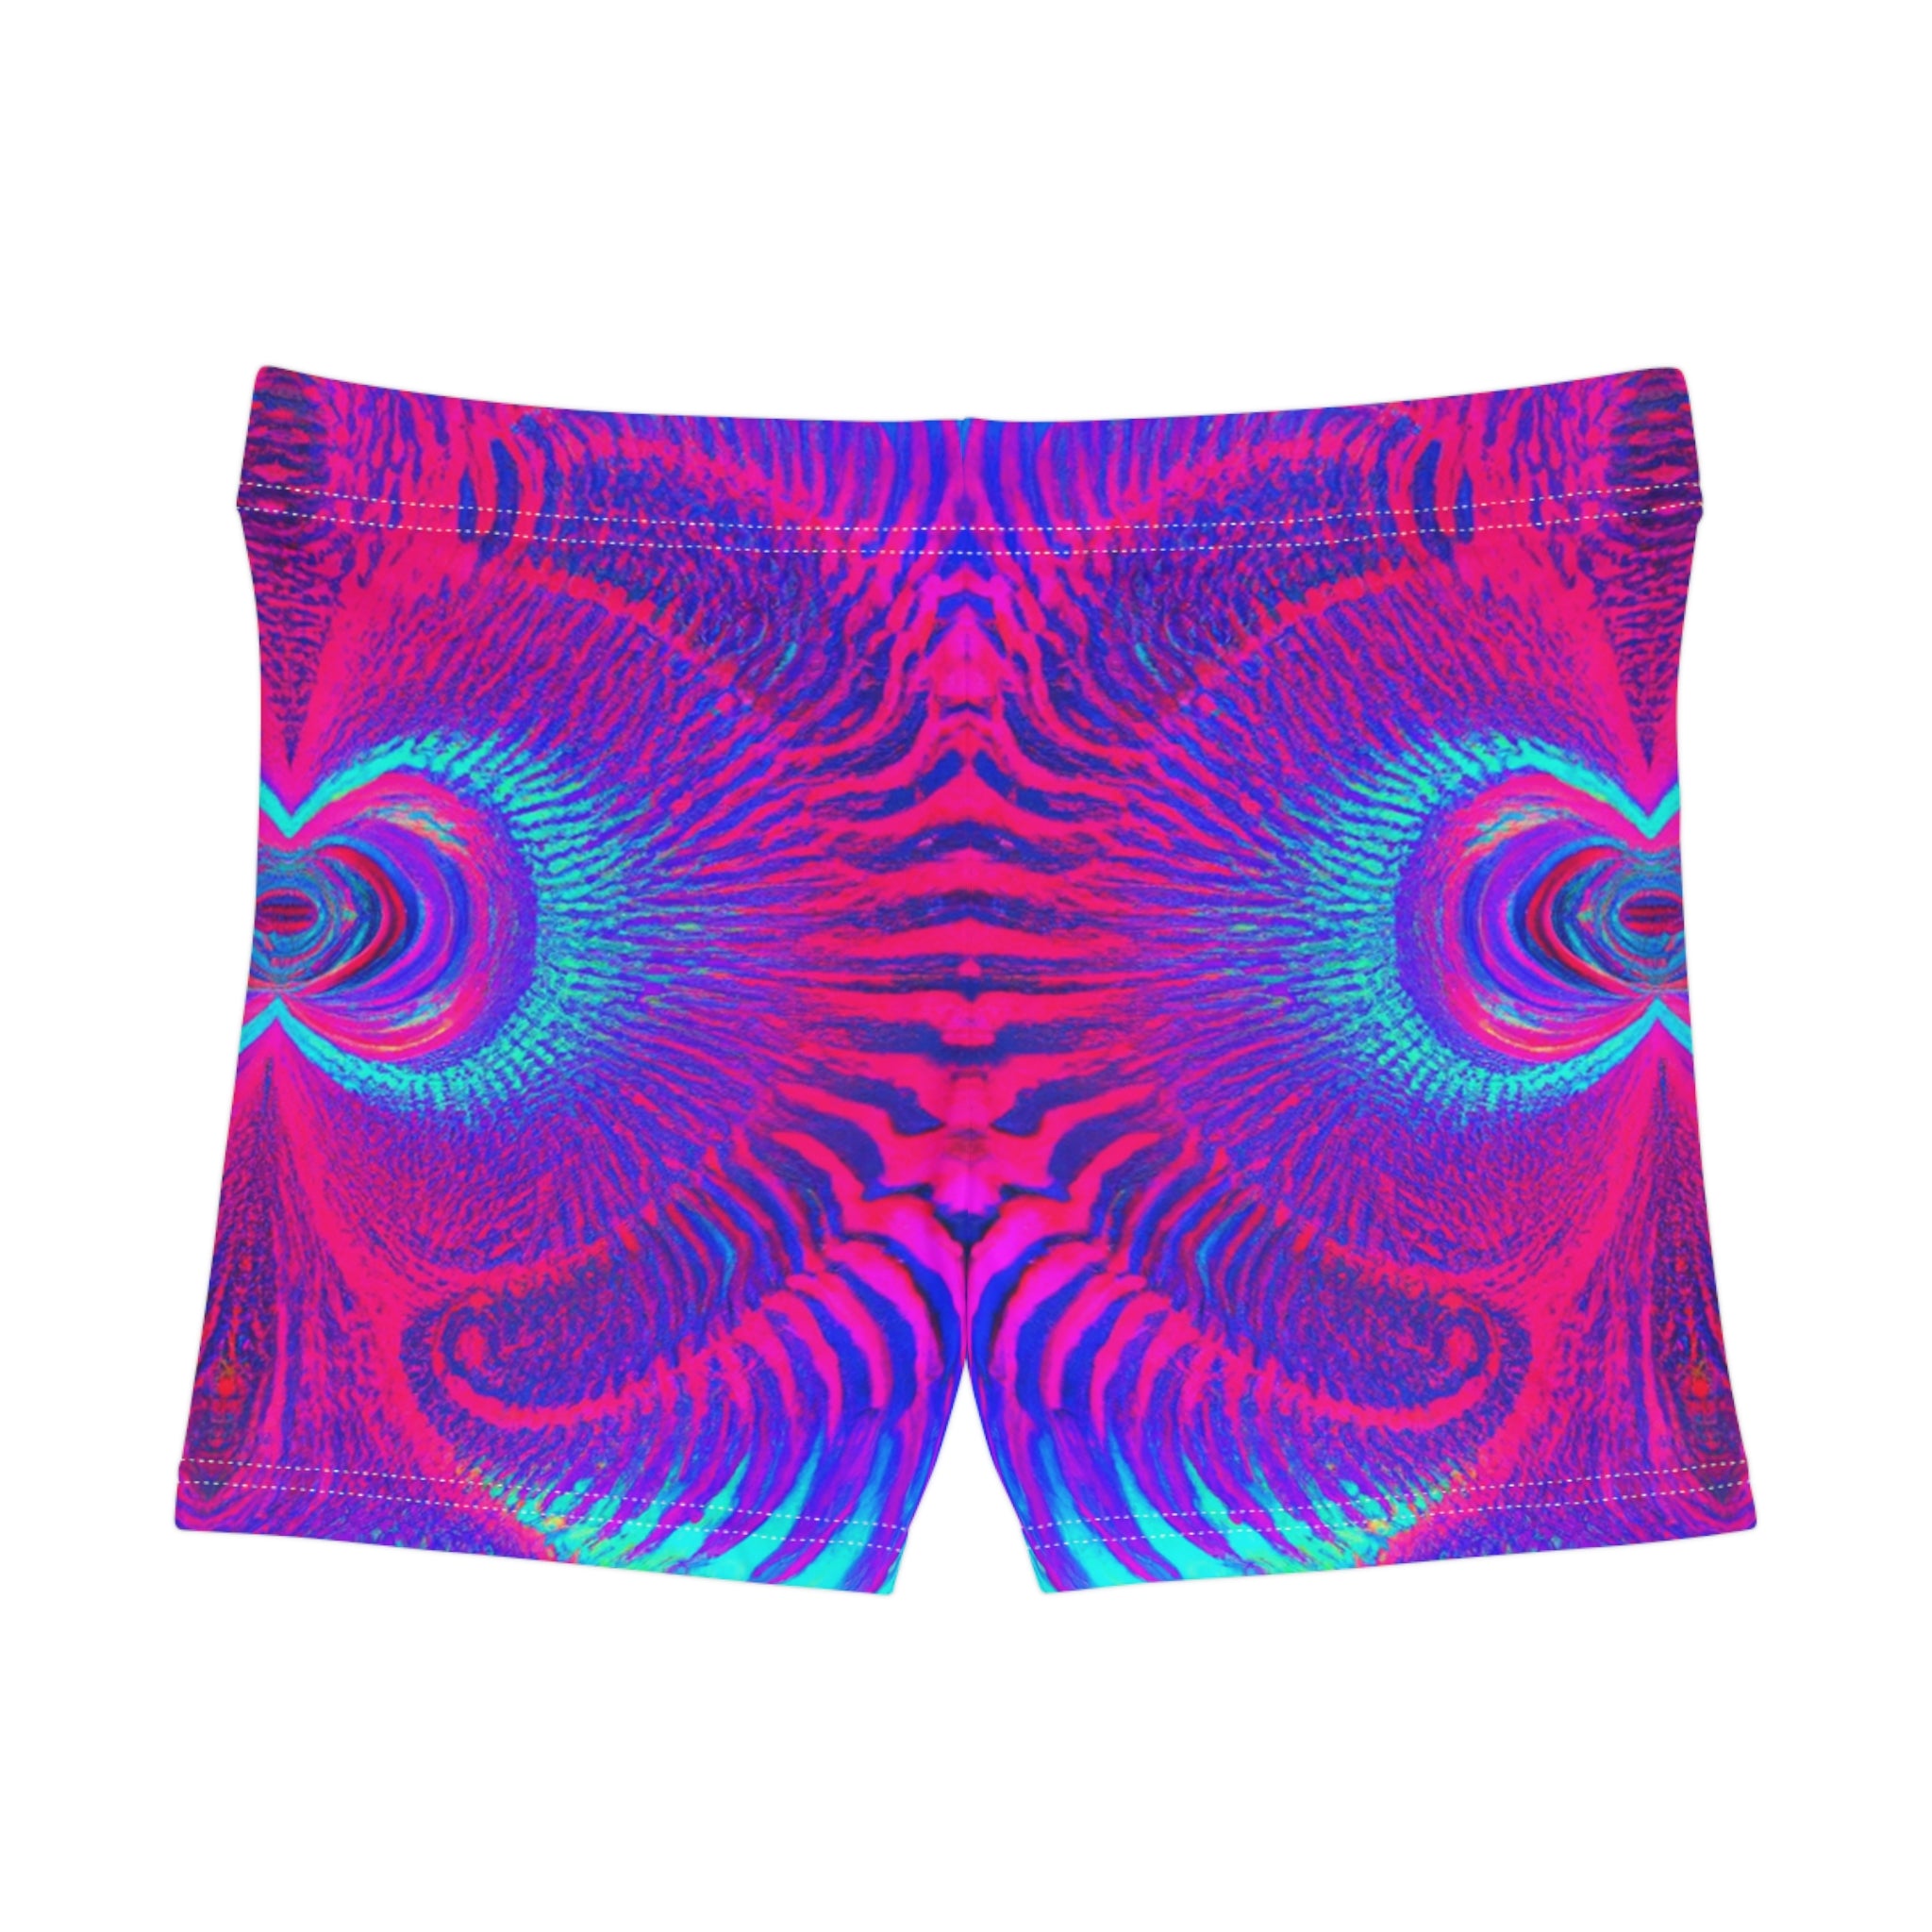 Galactic Reverie Women's Shorts